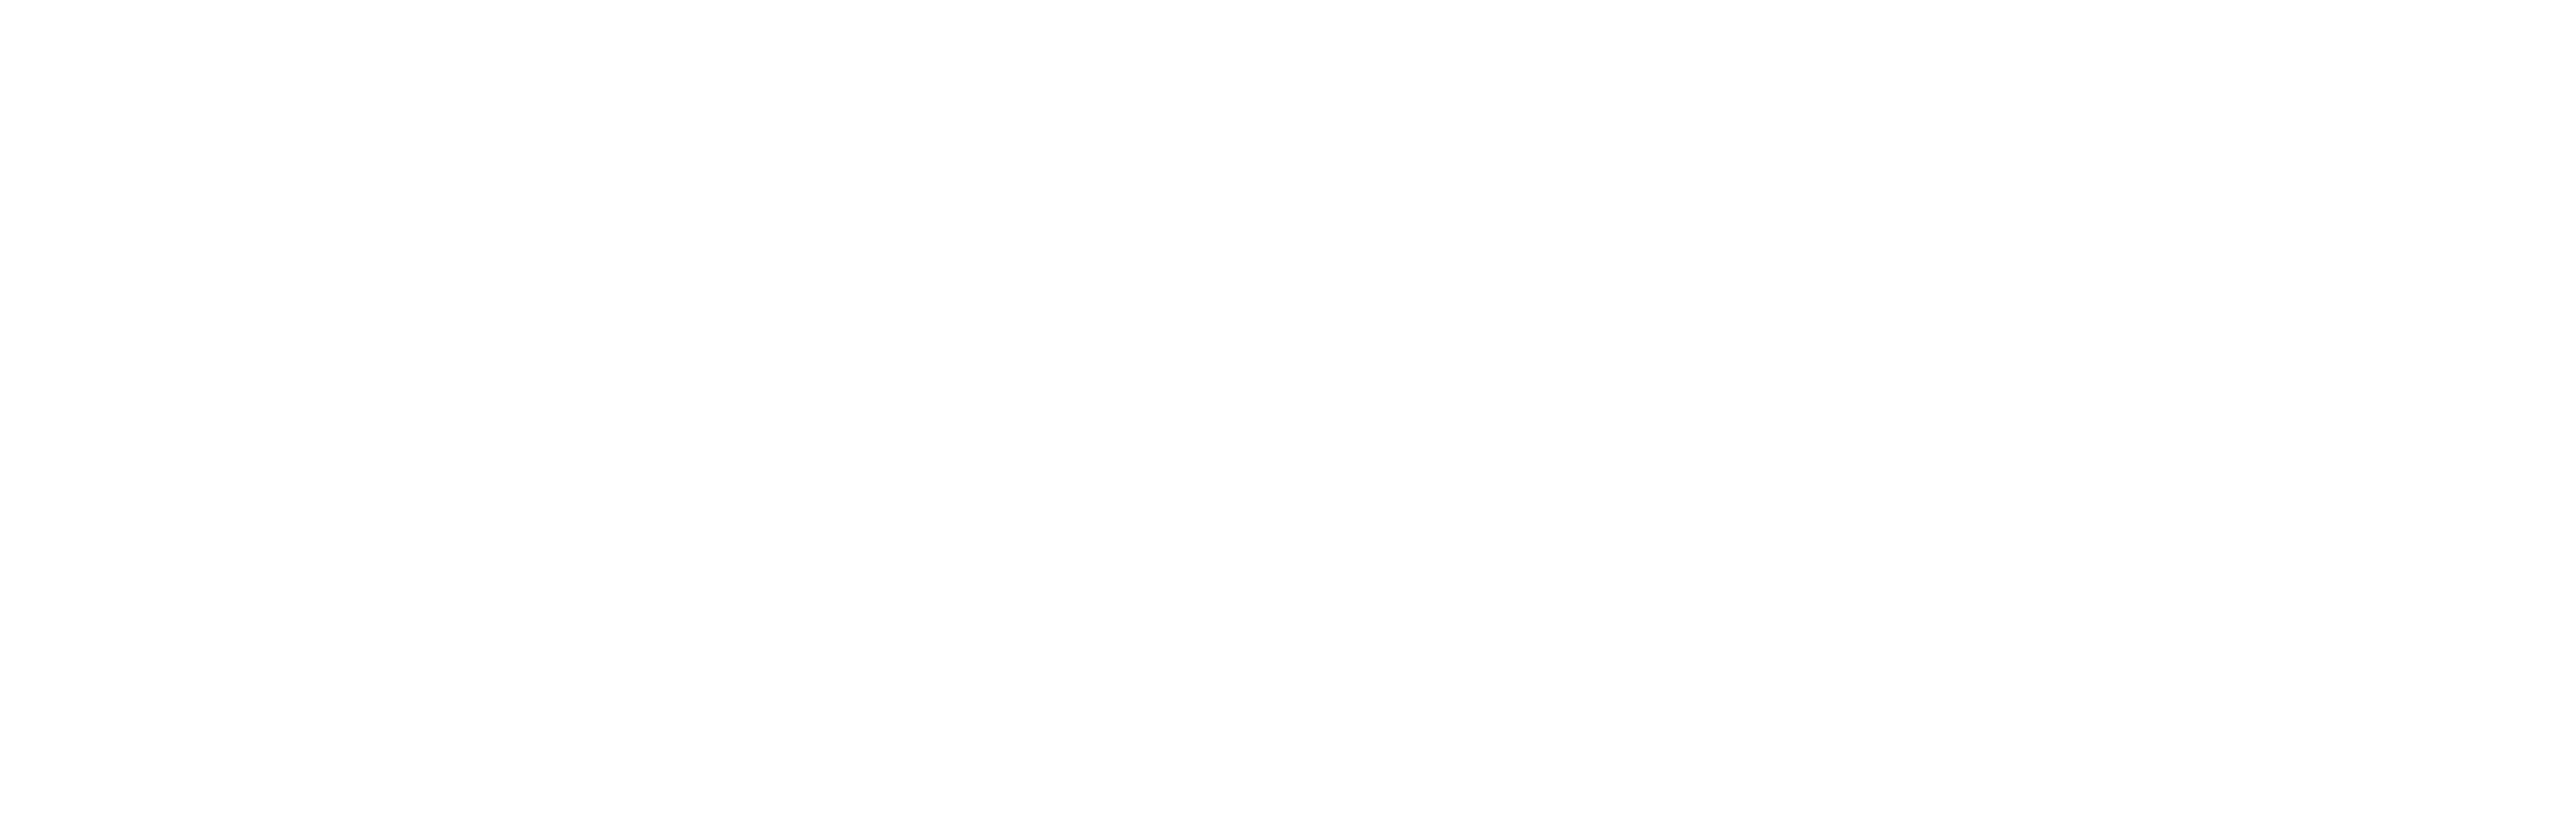 ESCAPES 2020 | Third Space